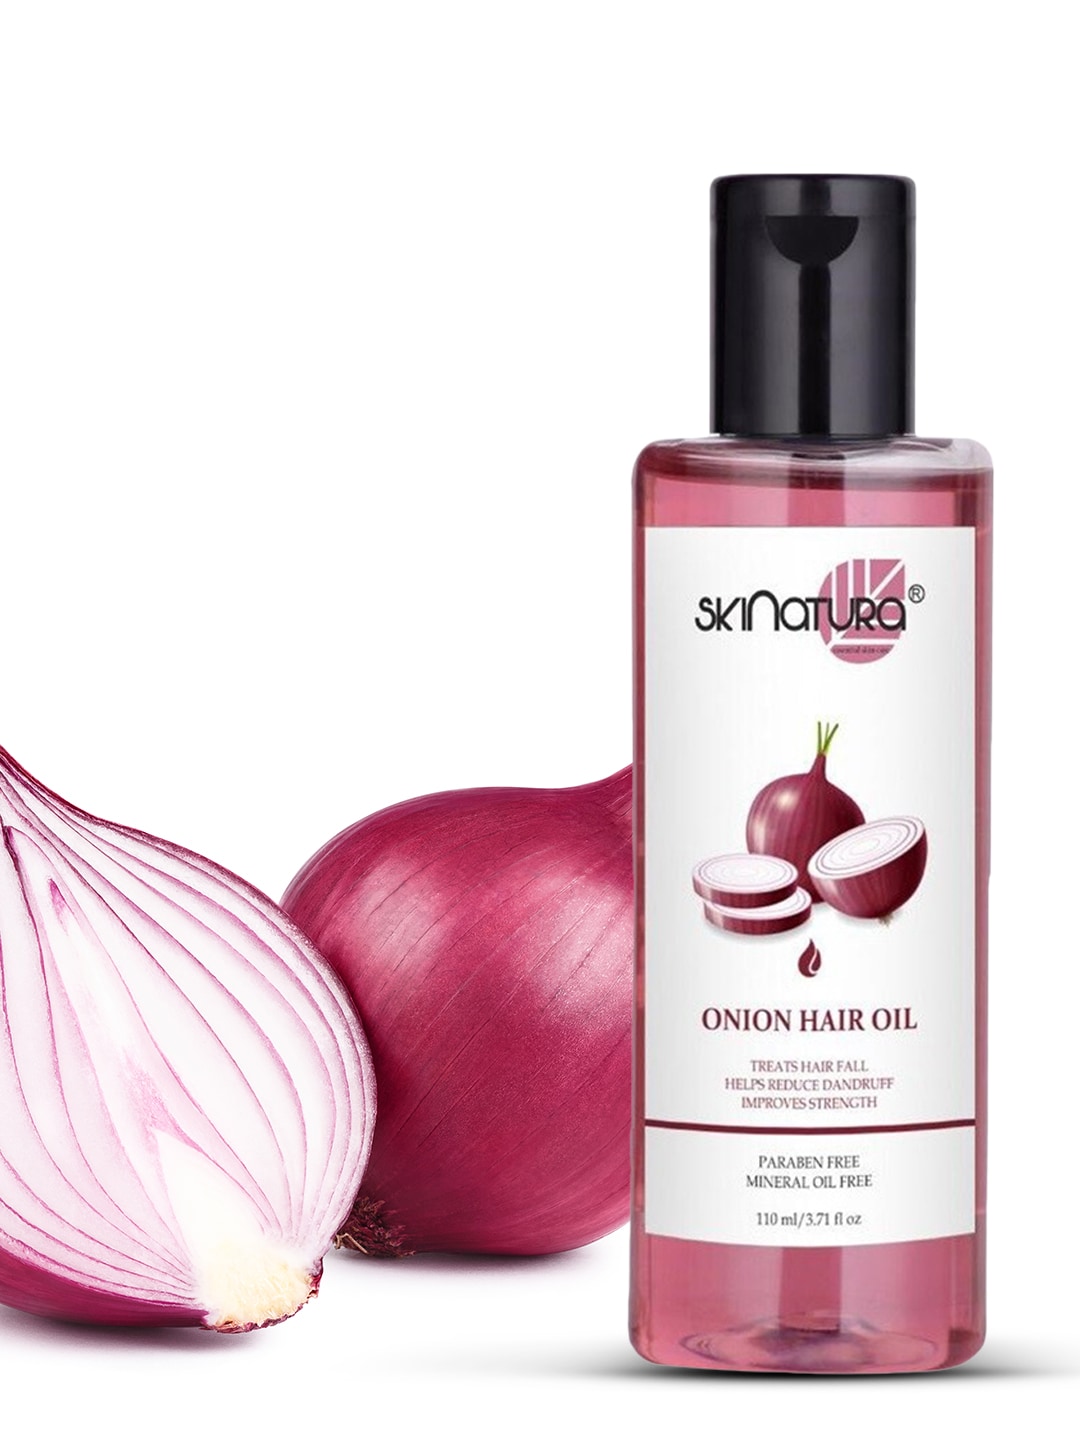 Skinatura Onion Hair Oil - 110 ml Price in India